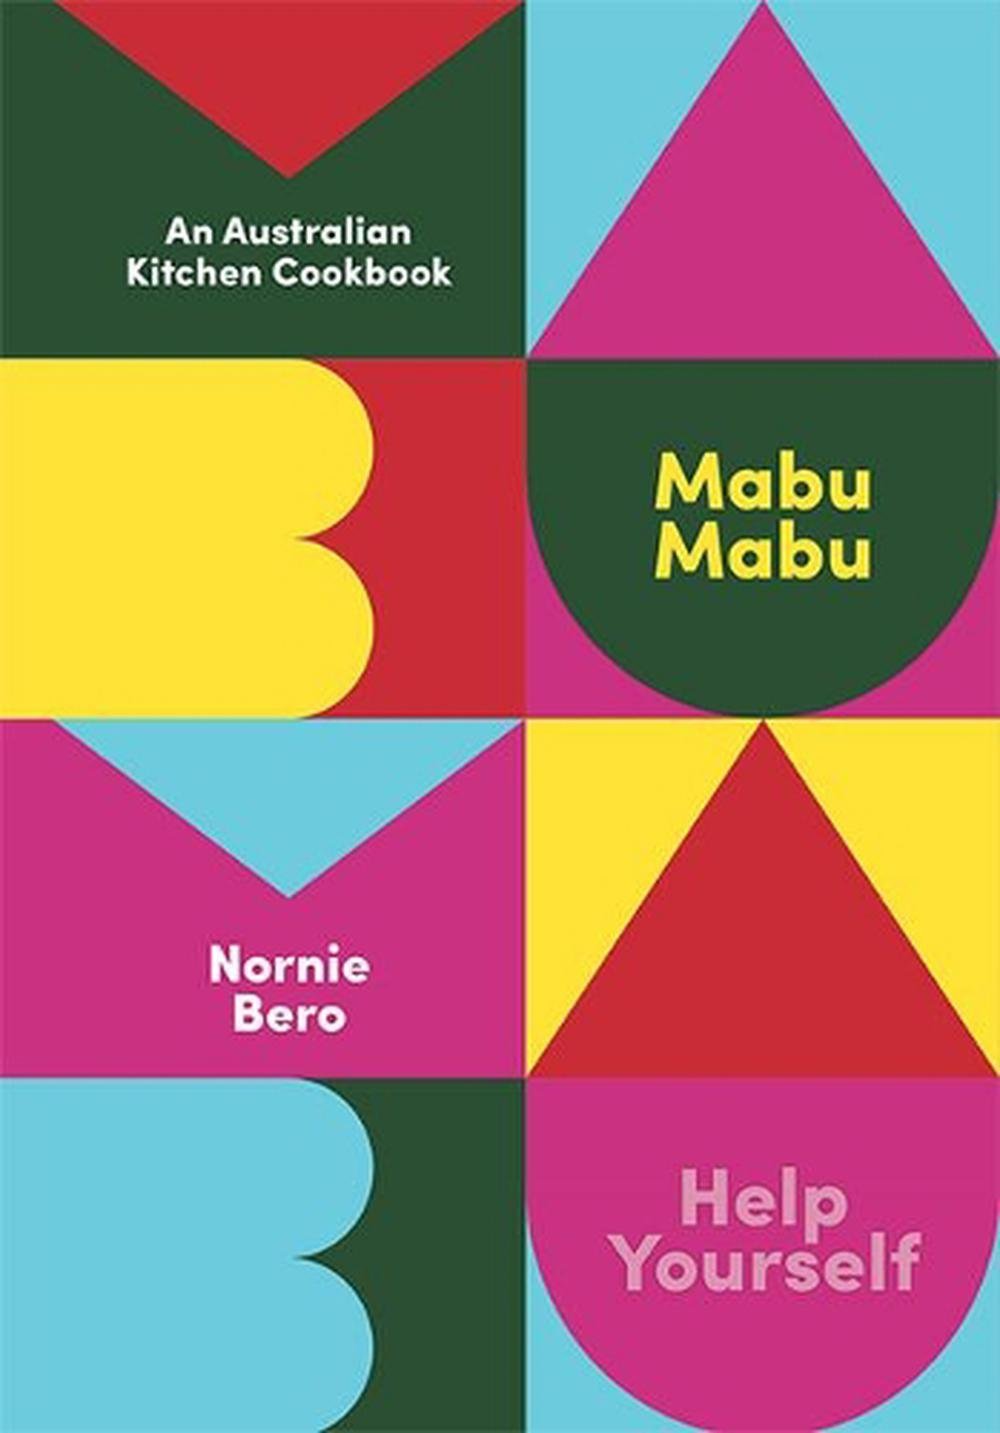 Mabu Mabu by Nornie Bero - Hardie Grant - Burnt Honey Bakery